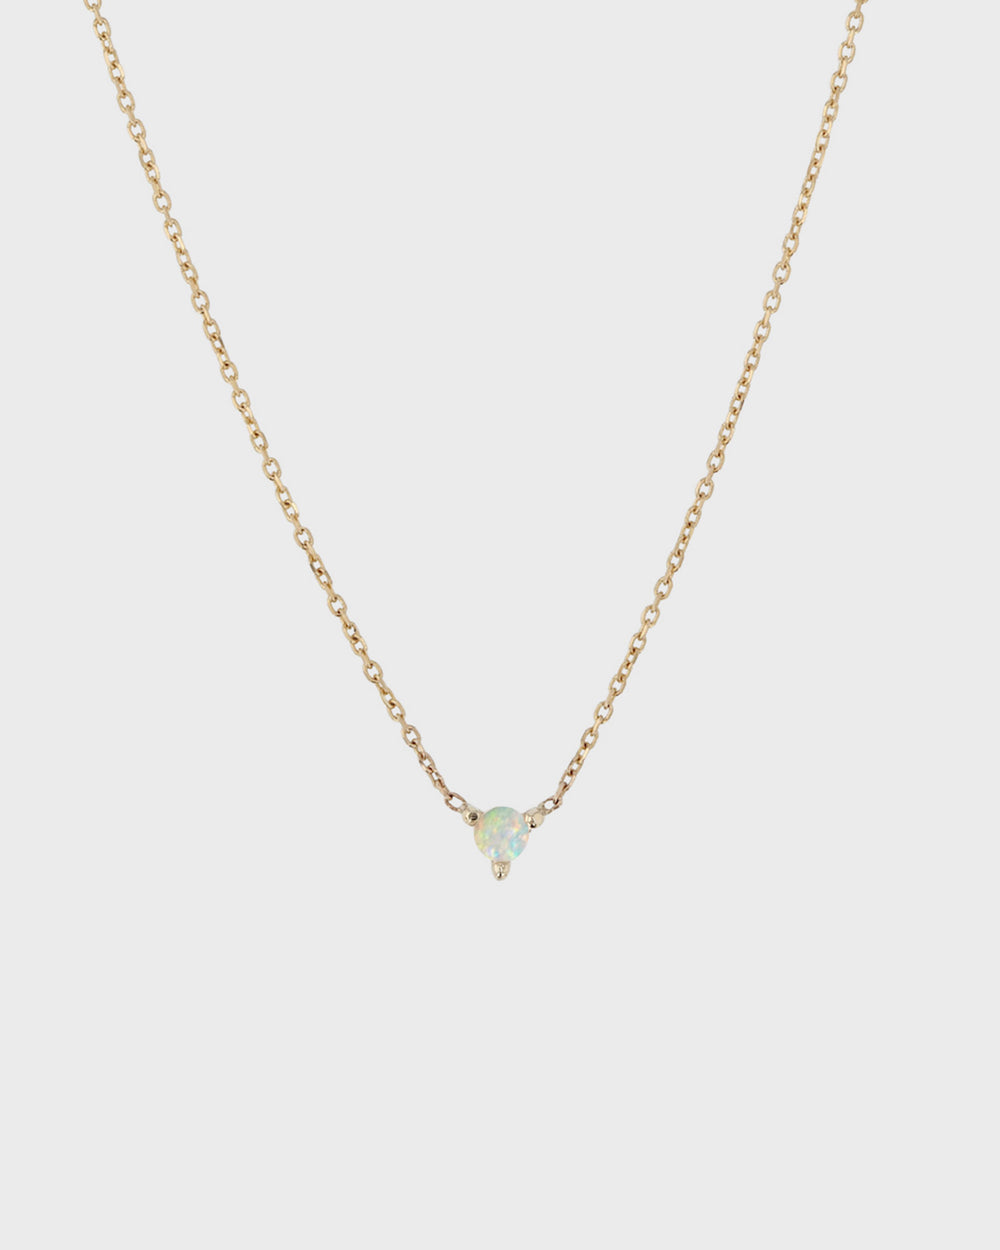 The Petite Opal Birthstone Necklace by Sarah & Sebastian